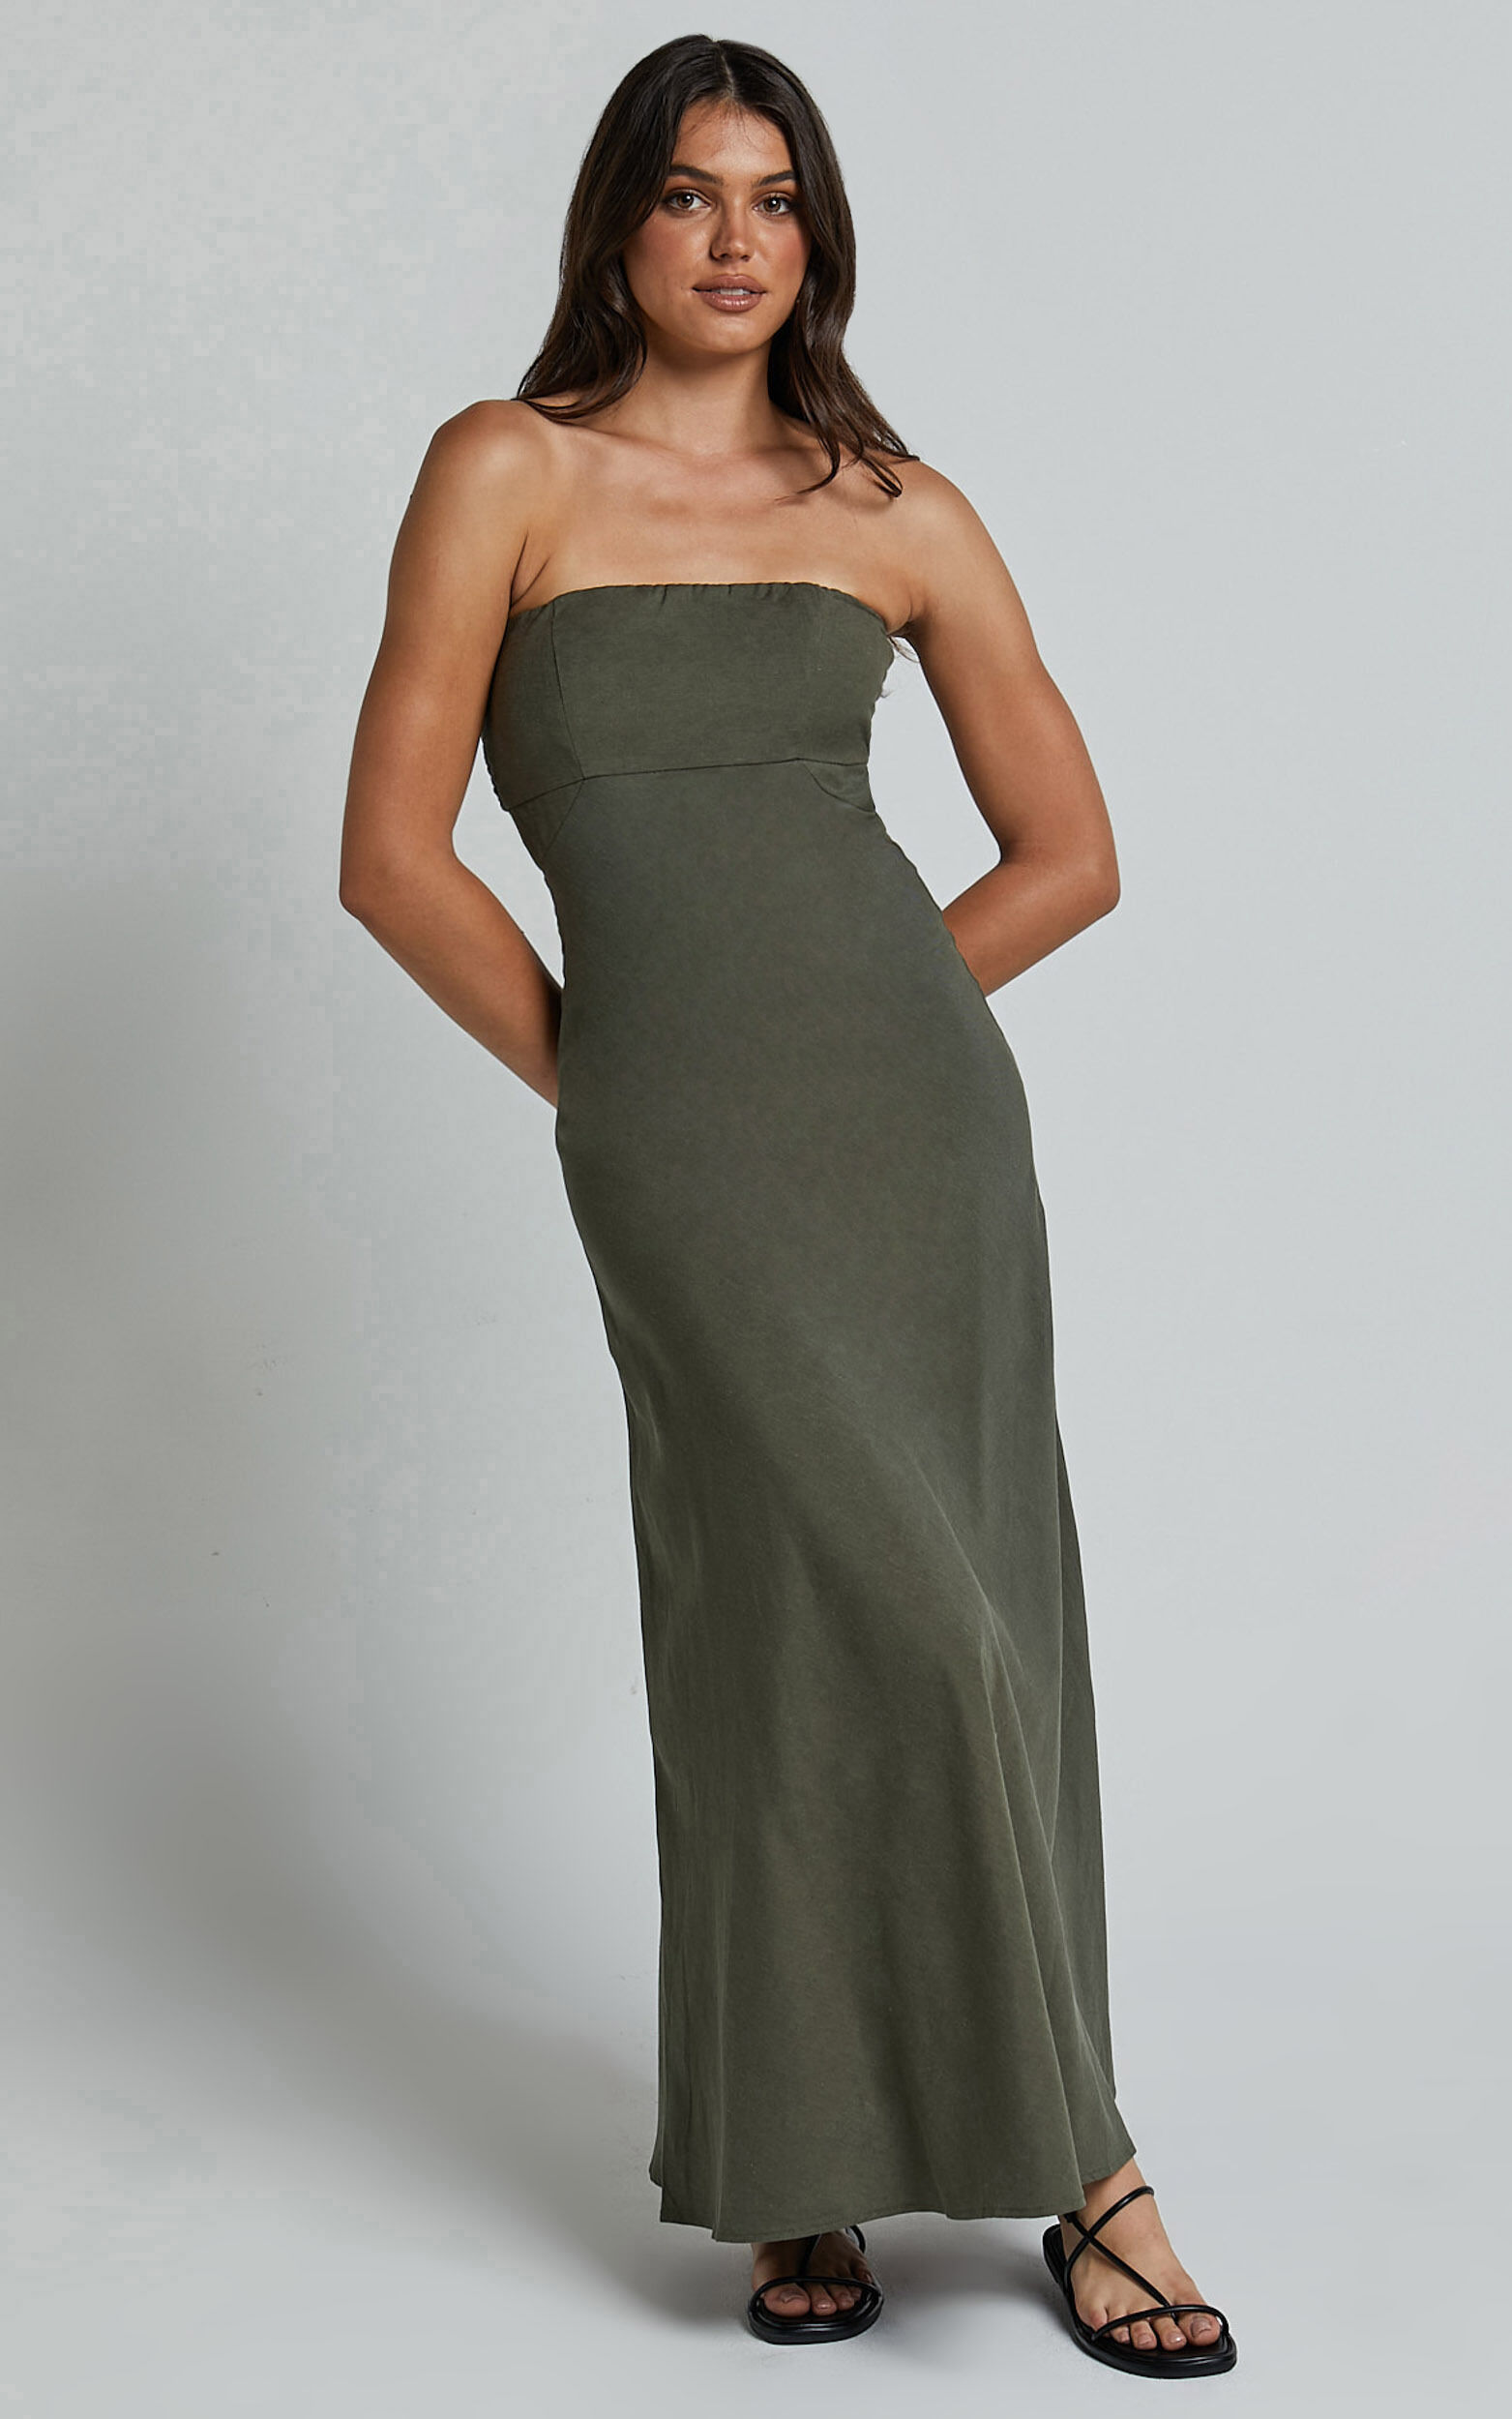 Elerie Maxi Dress - Strapless Linen Dress in Olive - 06, GRN1